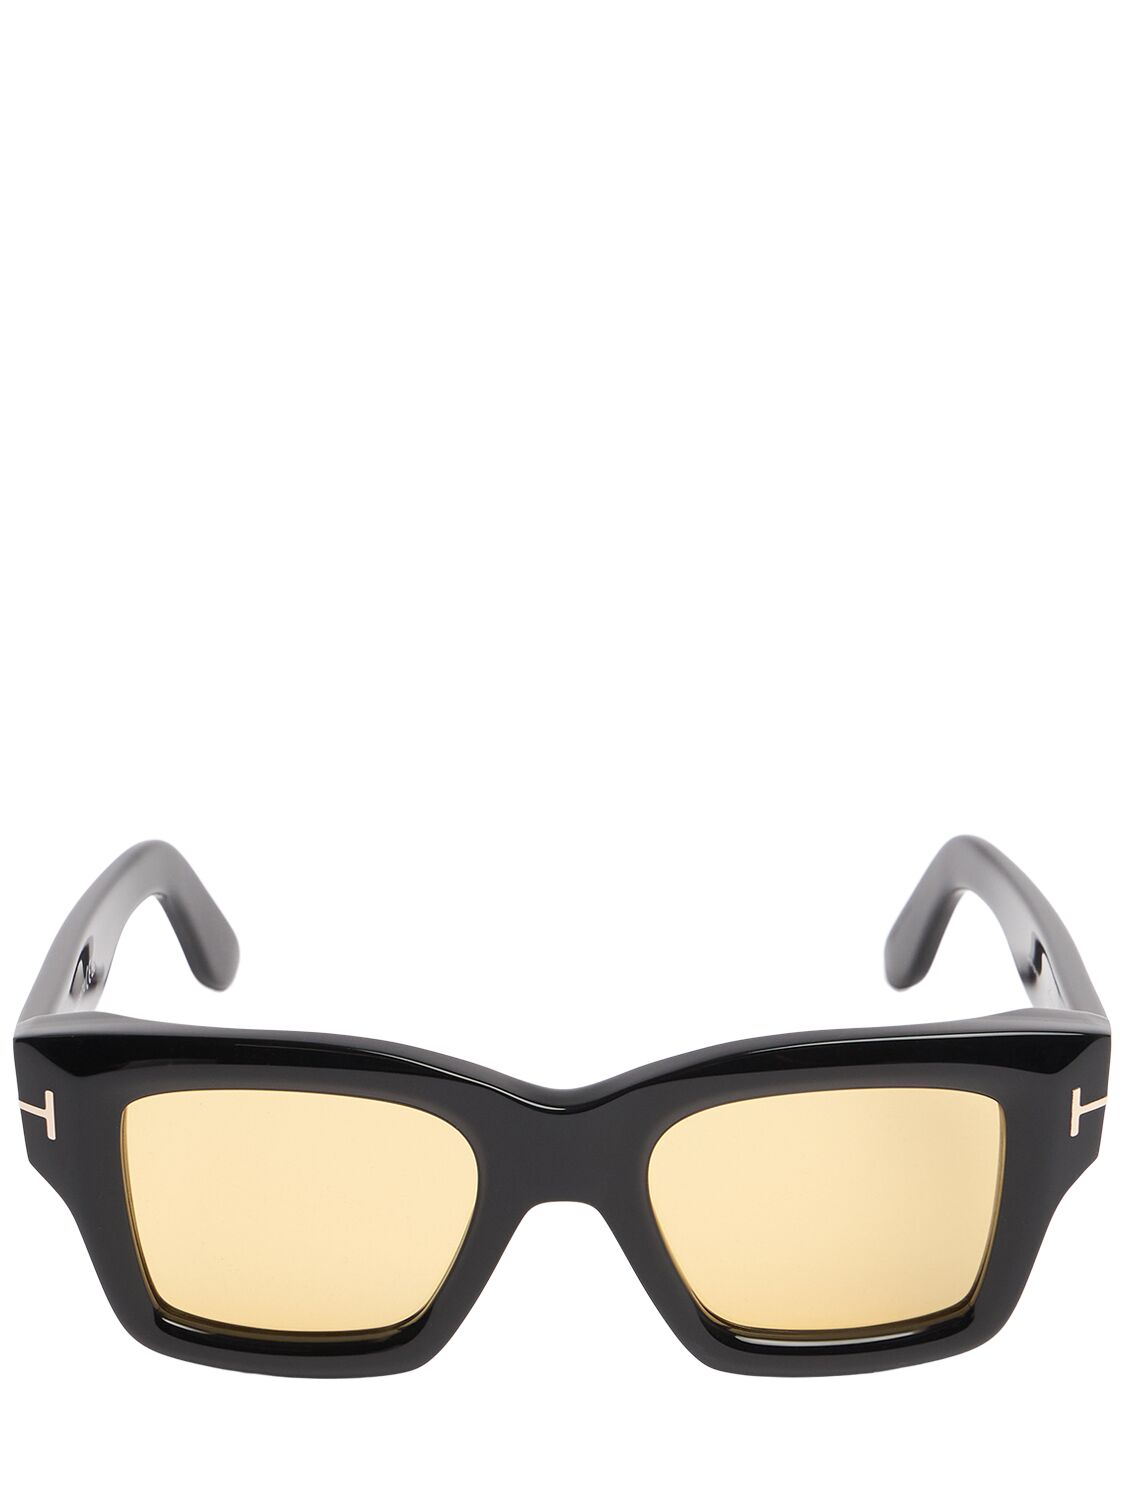 Tom Ford Ilias Squared Sunglasses In Black/brown